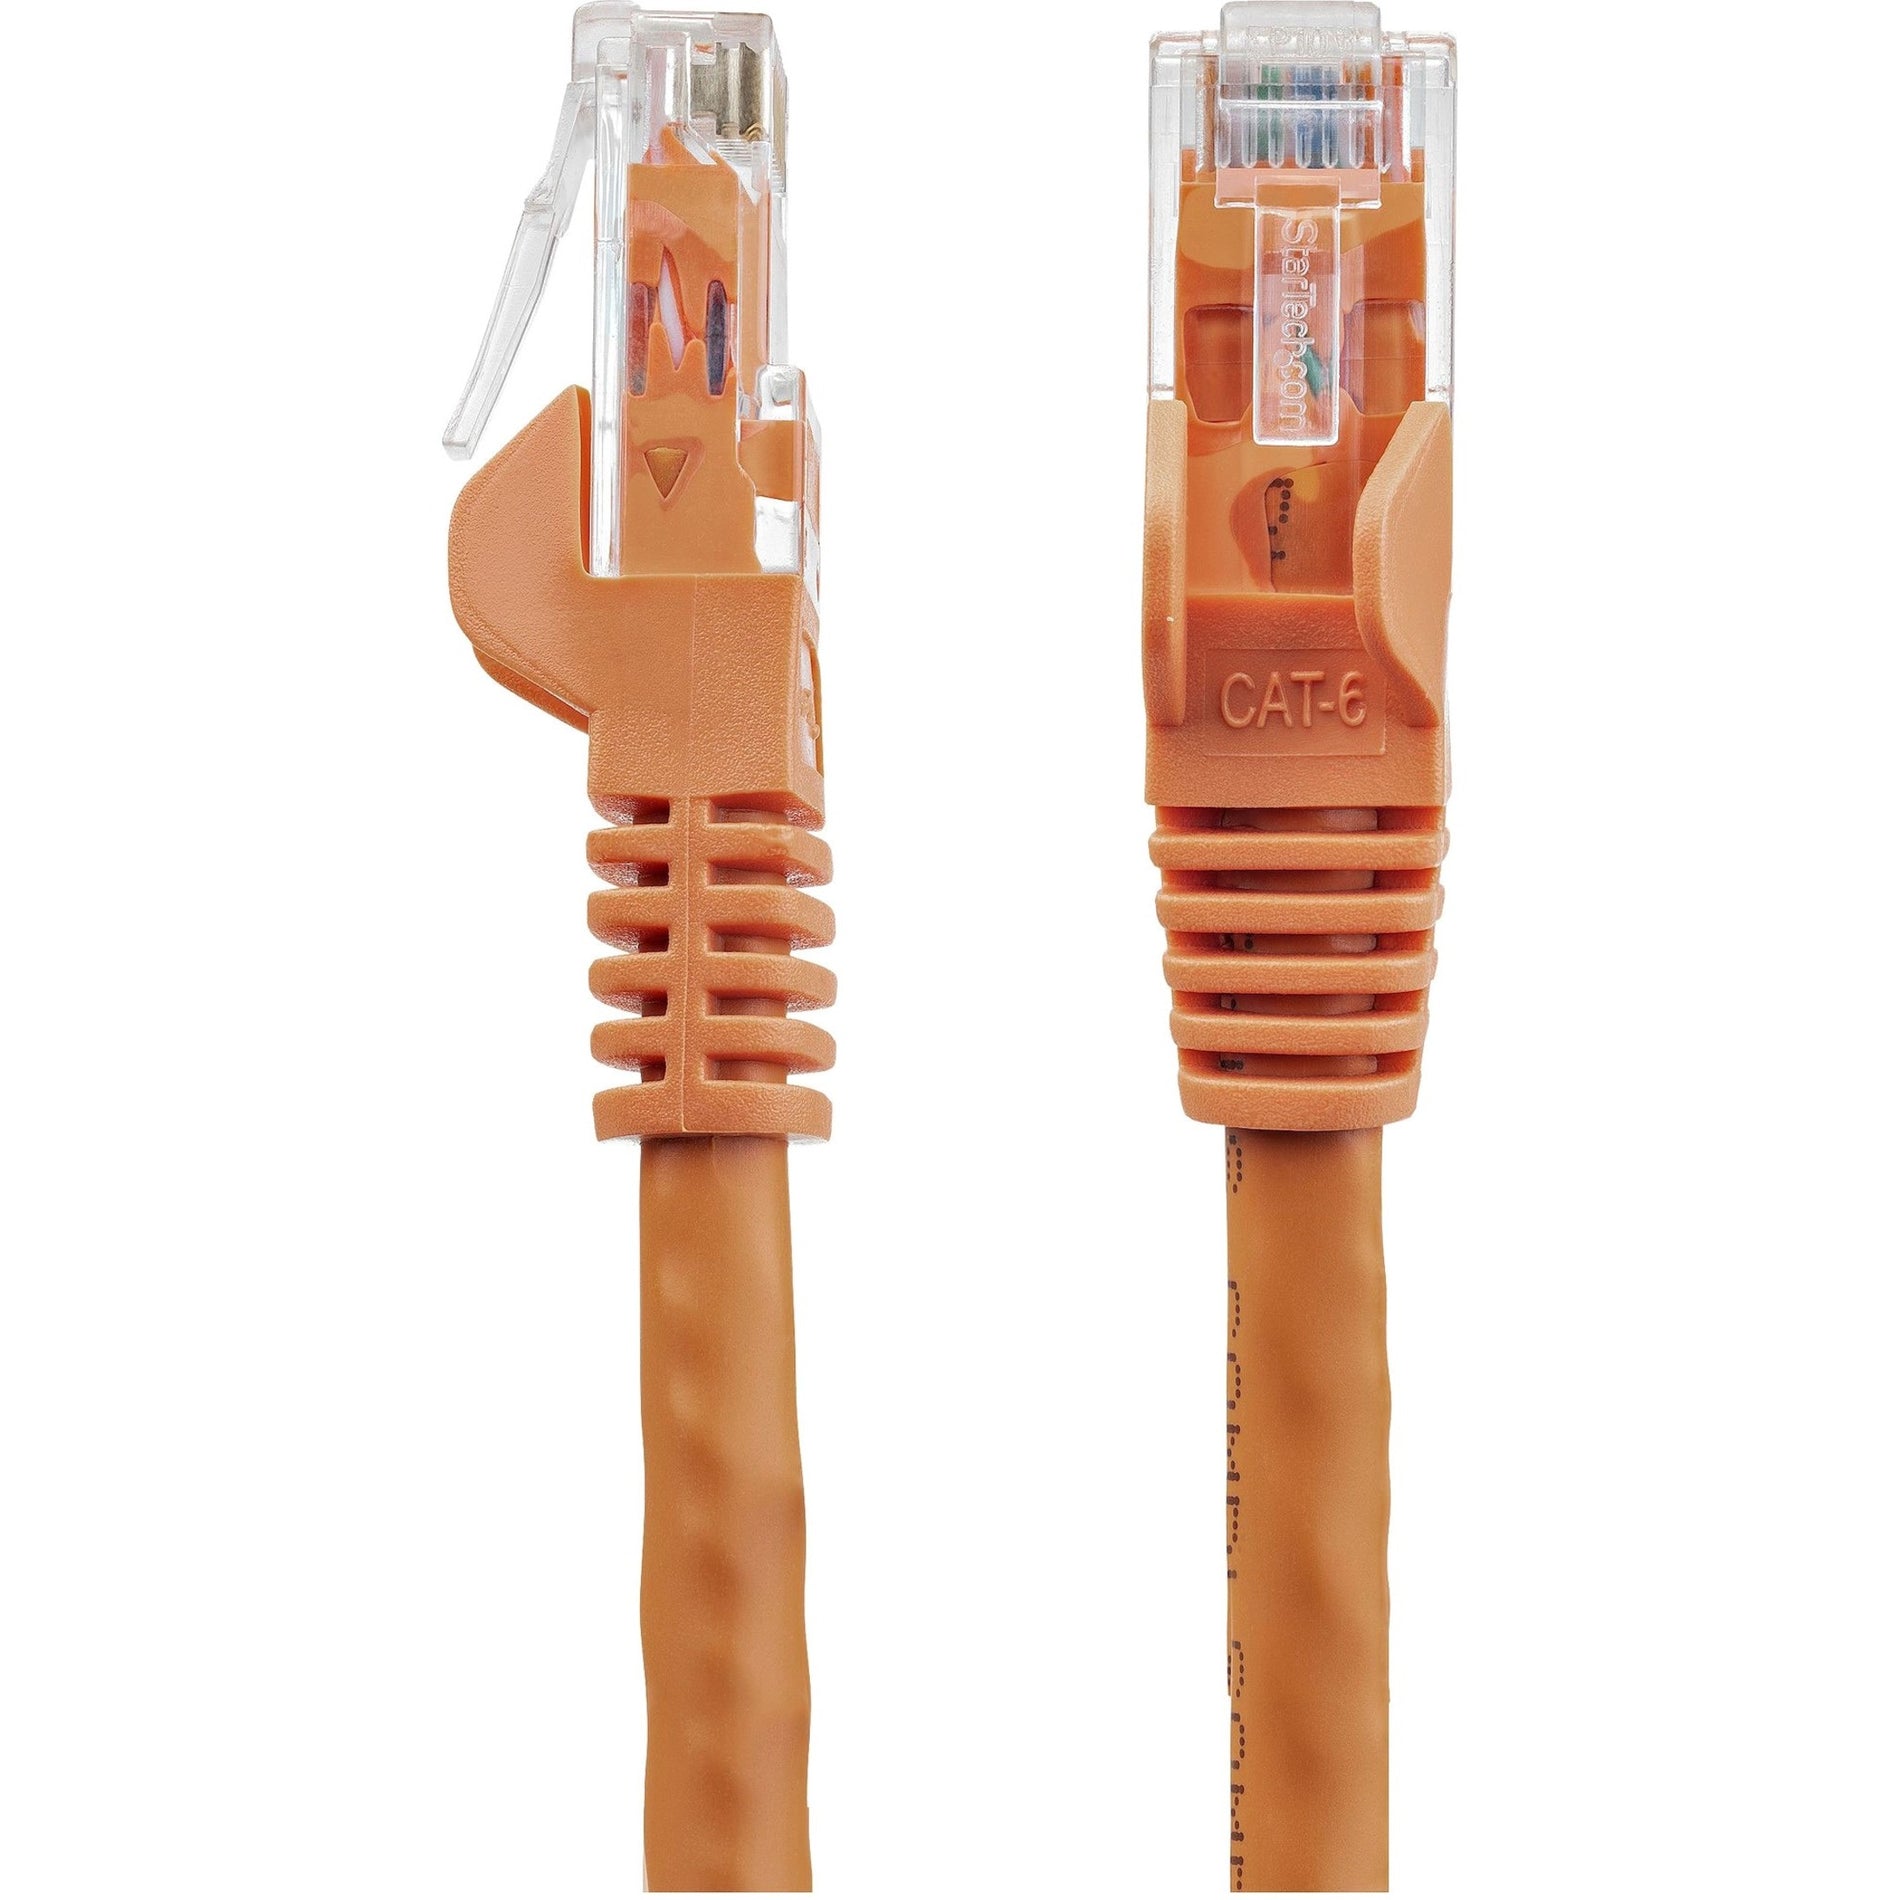 StarTech.com N6PATCH4OR Cat.6 Patch Cable, 4ft Orange Ethernet Cable, Snagless RJ45 Connectors